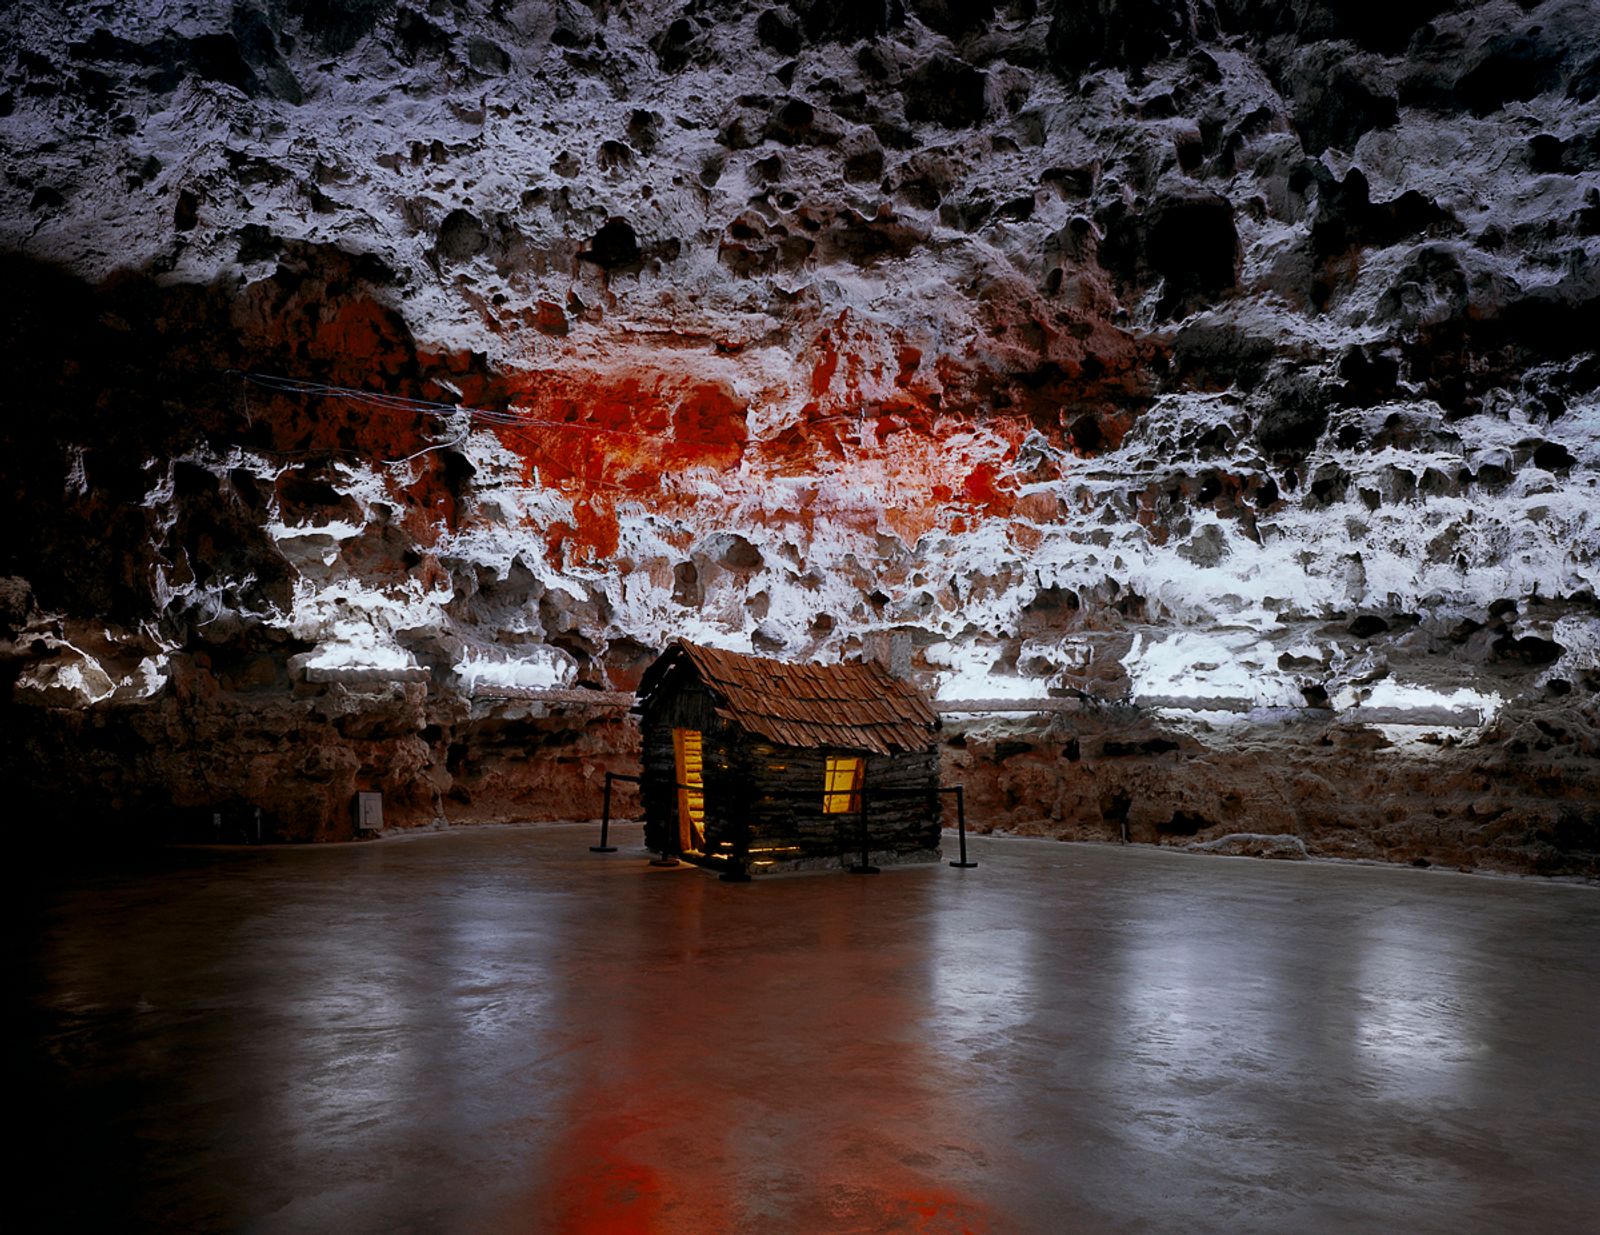 © Austin Irving - Jesse James' Hideout, Meramec Caverns, Missouri, USA, 2019